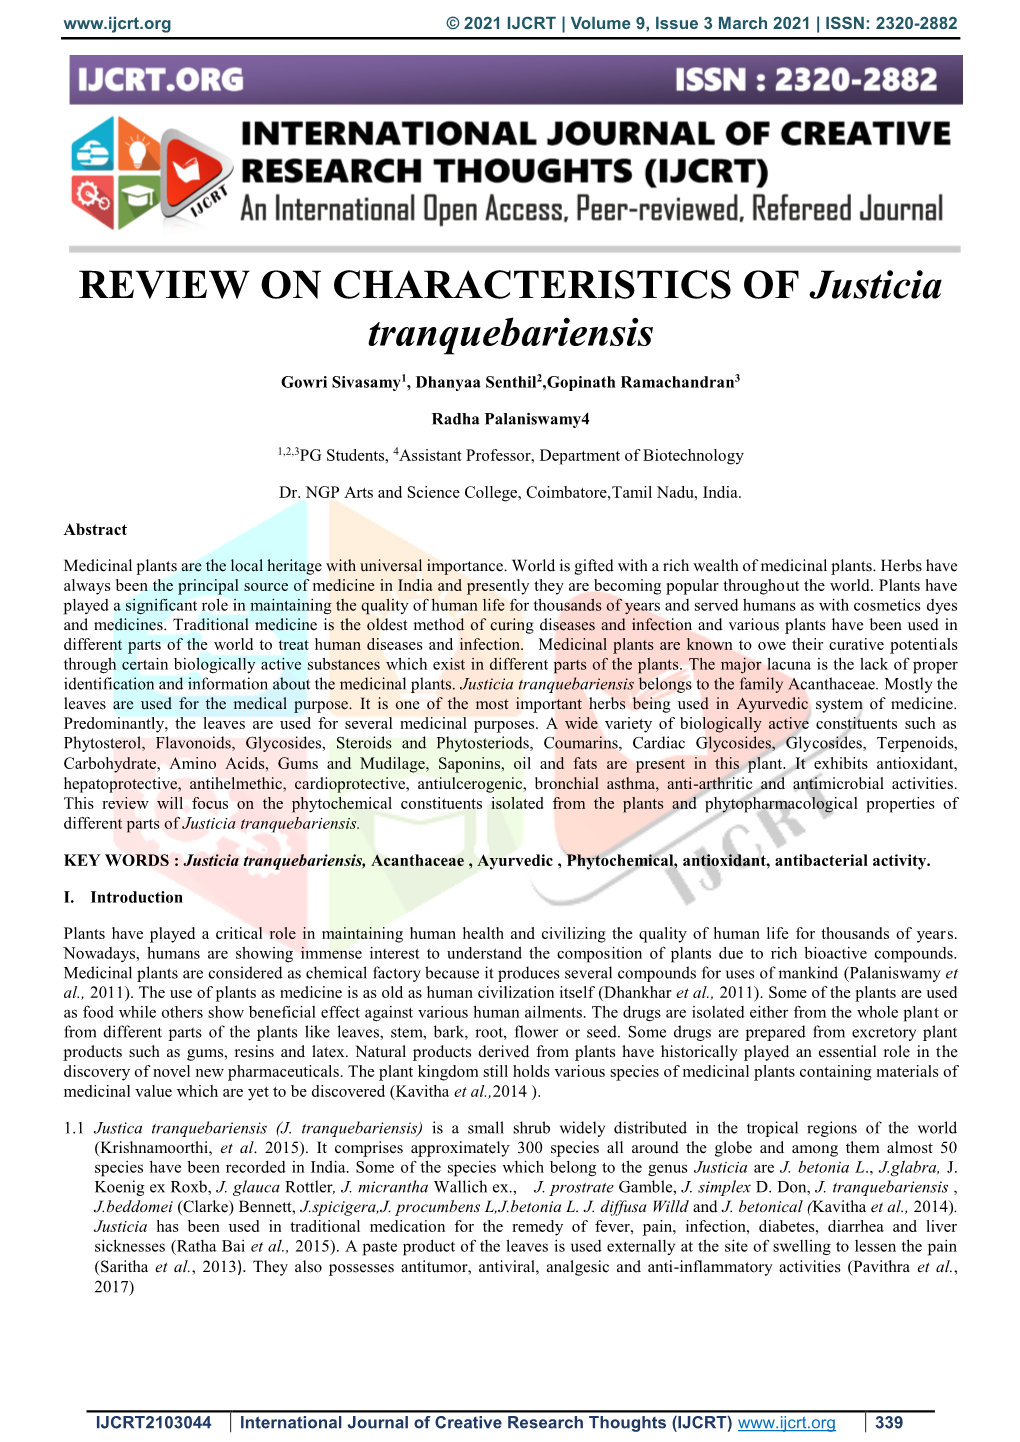 REVIEW on CHARACTERISTICS of Justicia Tranquebariensis